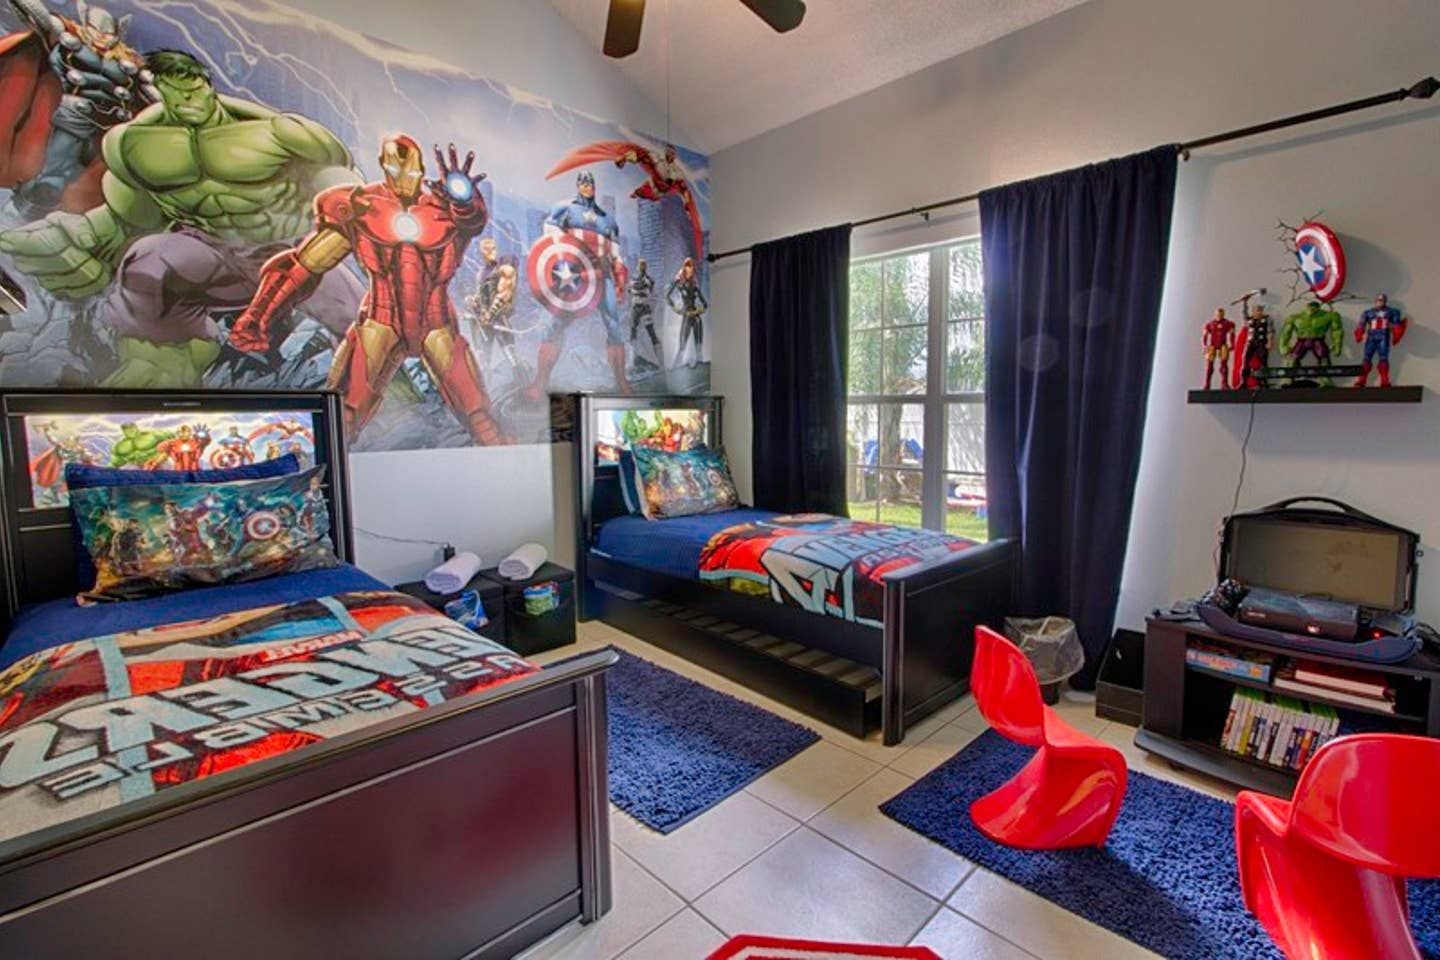 Комната марвел. Интерьер в стиле Марвел. Комната в стиле супергероев. Комната в стиле Мстителей. Детские комнаты в стиле Марвел.